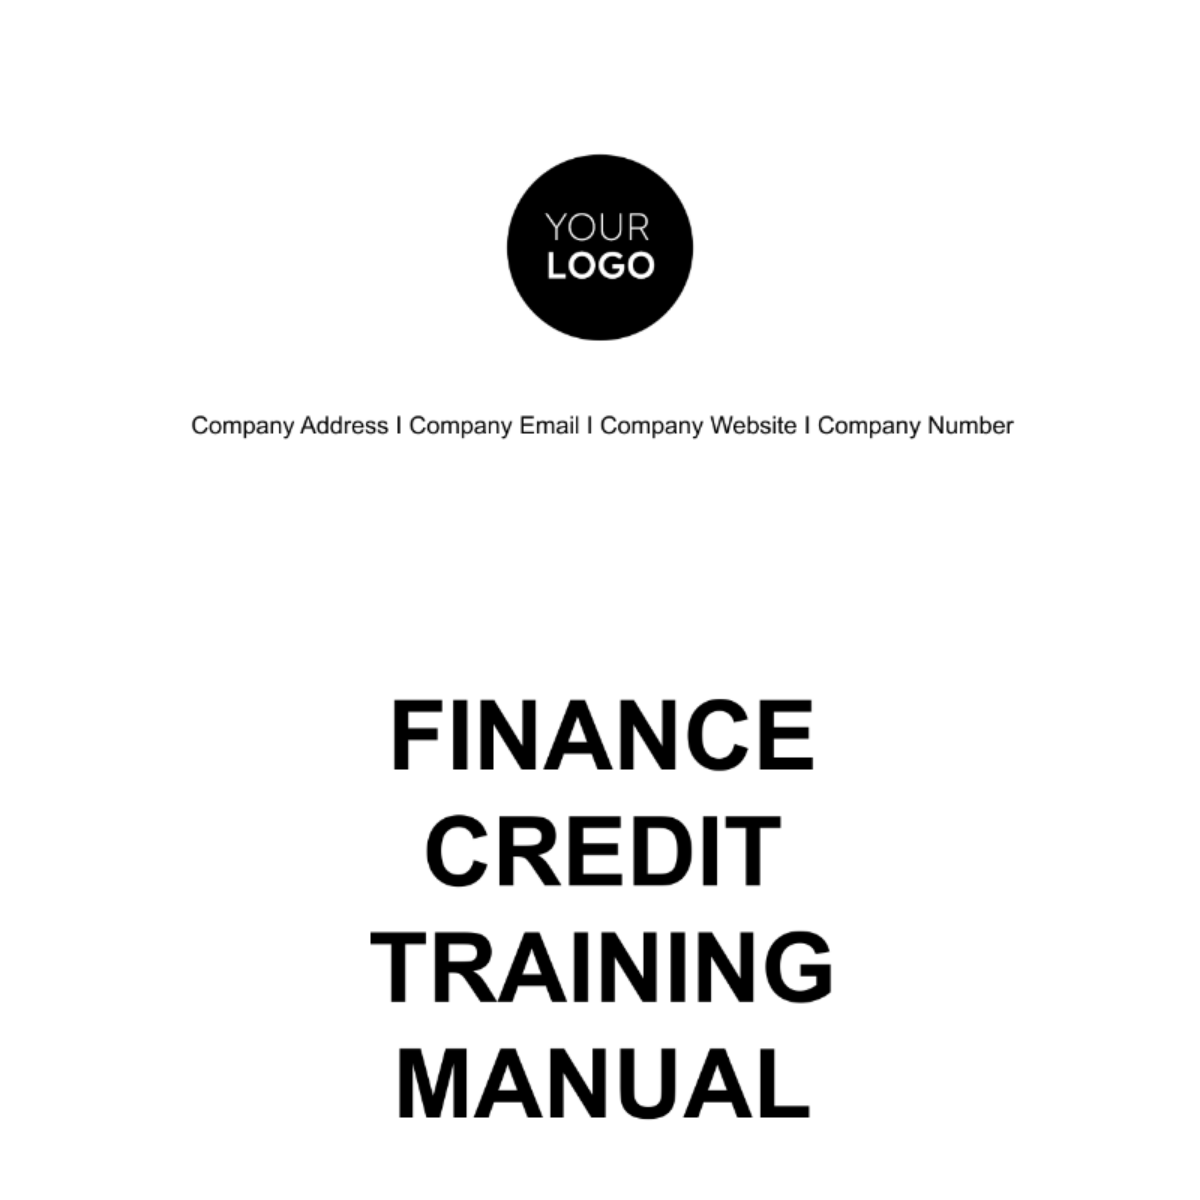 Free Finance Credit Training Manual Template